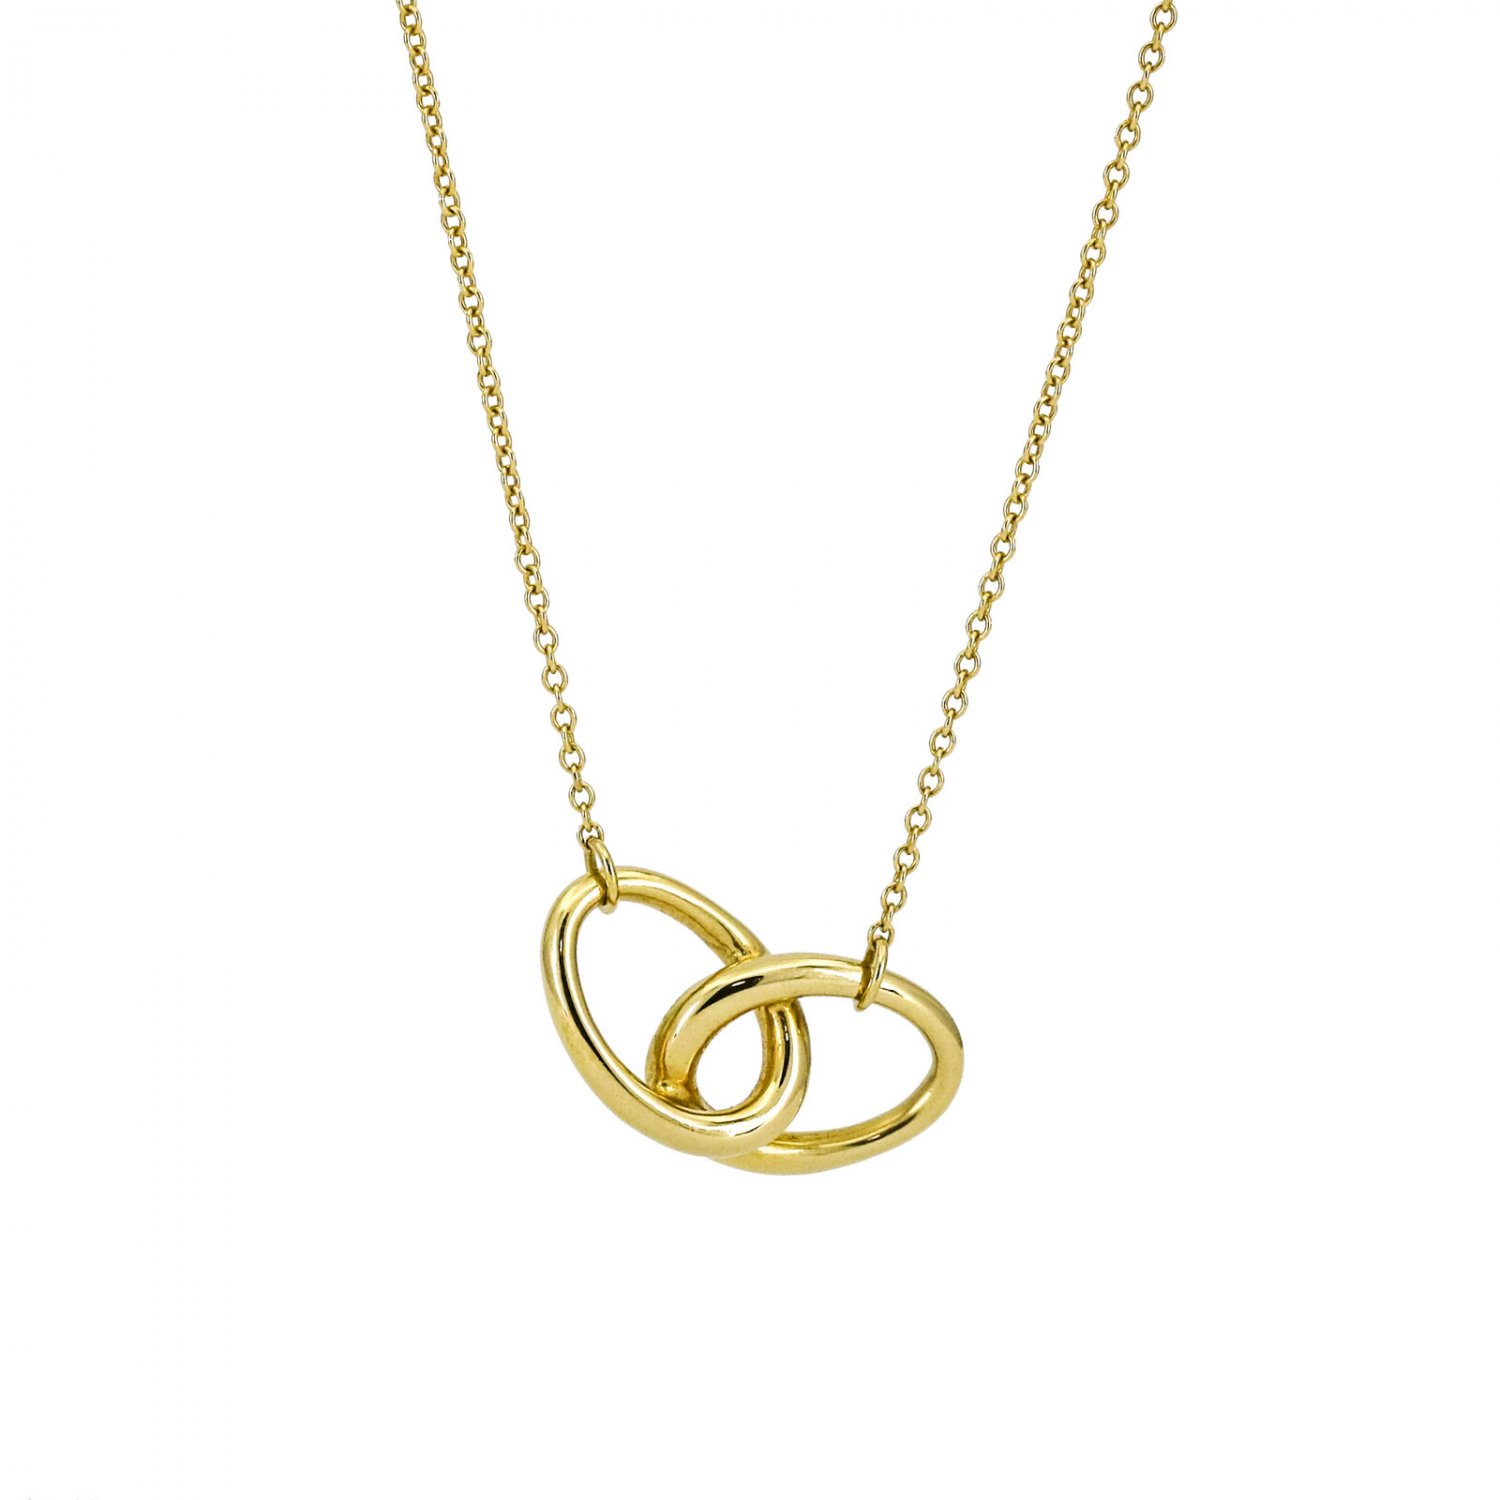 Tiffany & Co. Elsa Peretti Interlocking Necklace in 18k Yellow Gold